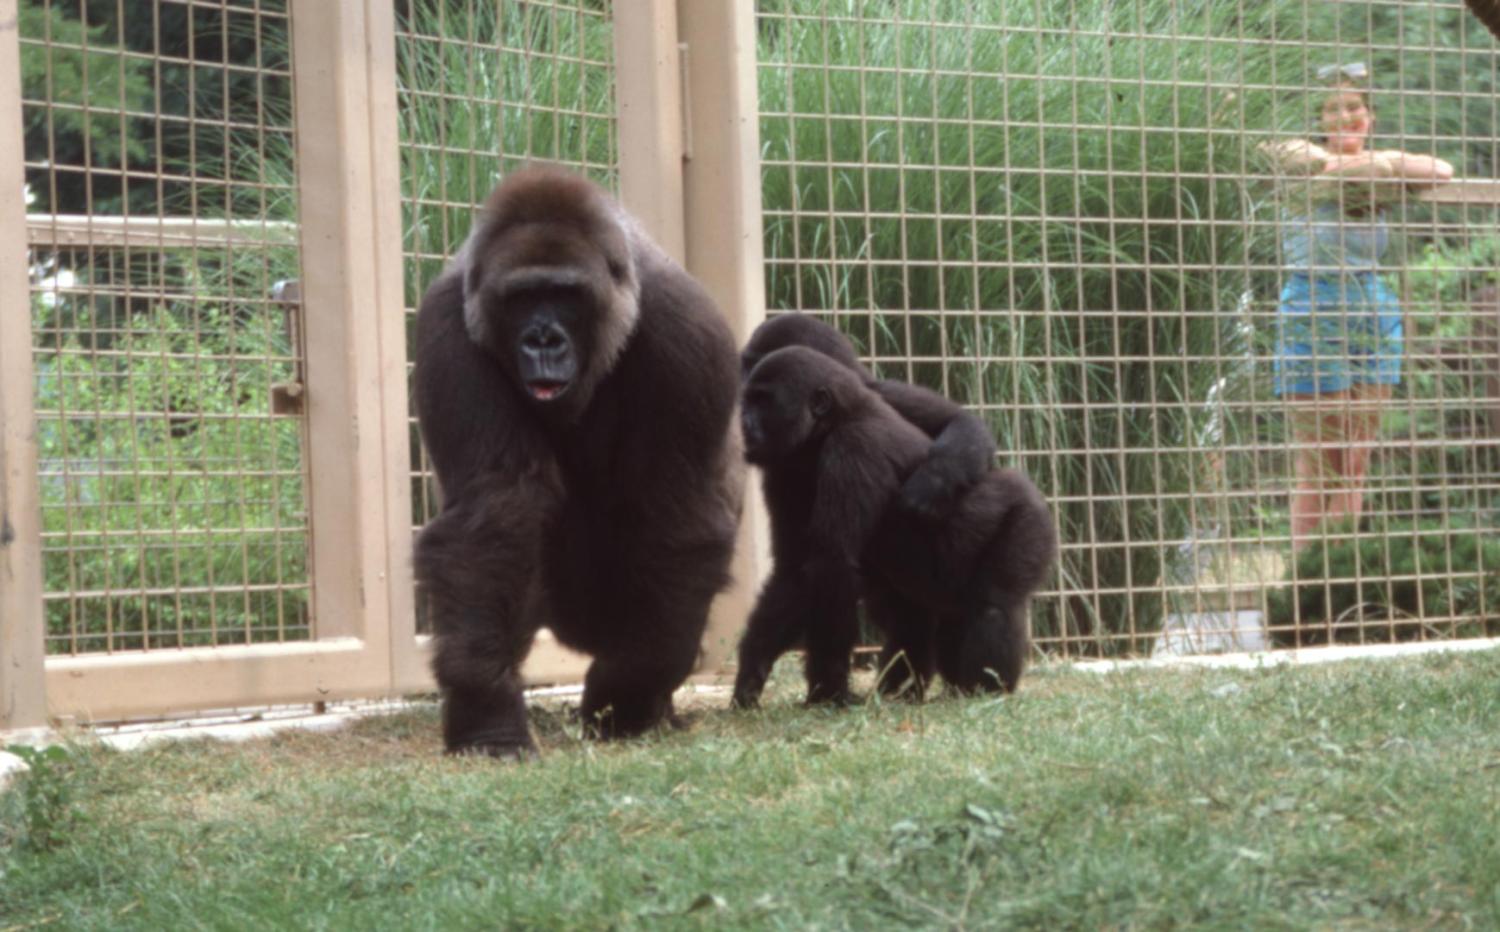 gorillas in zoo habitat